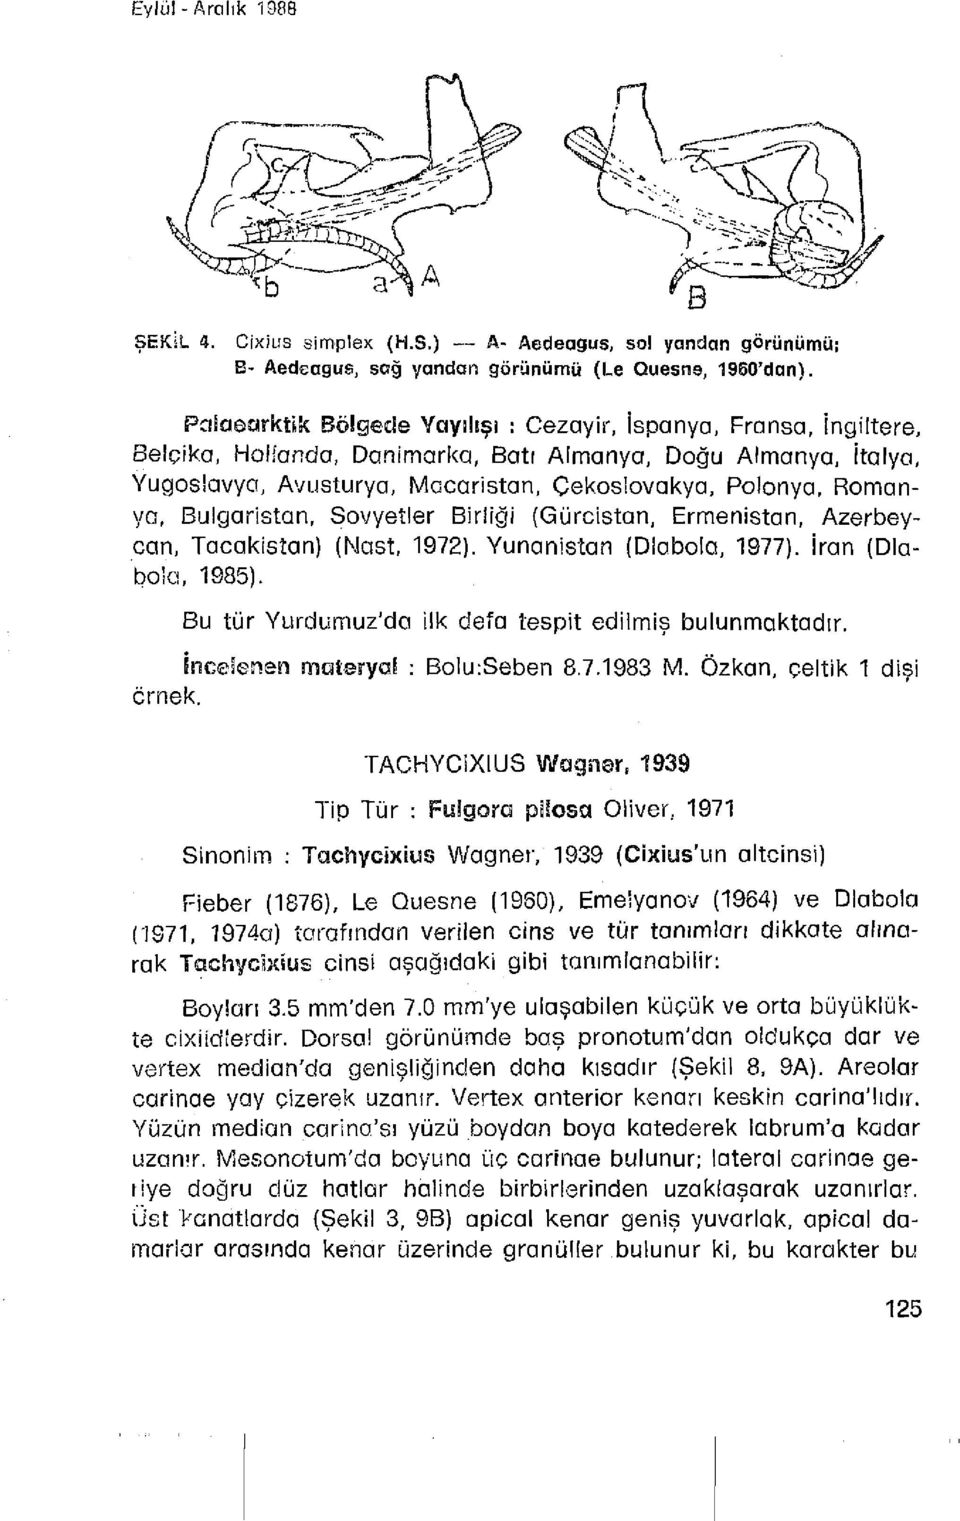 Romanye, Bulgaristan, SOl/yetler Sirligi (Gurcistan, Ermenistan, Azerbeycan, Tacakistan) (Nast. 1972). Yunanistan (DlabolCl, 1977). iran (Dlabola, 1985).